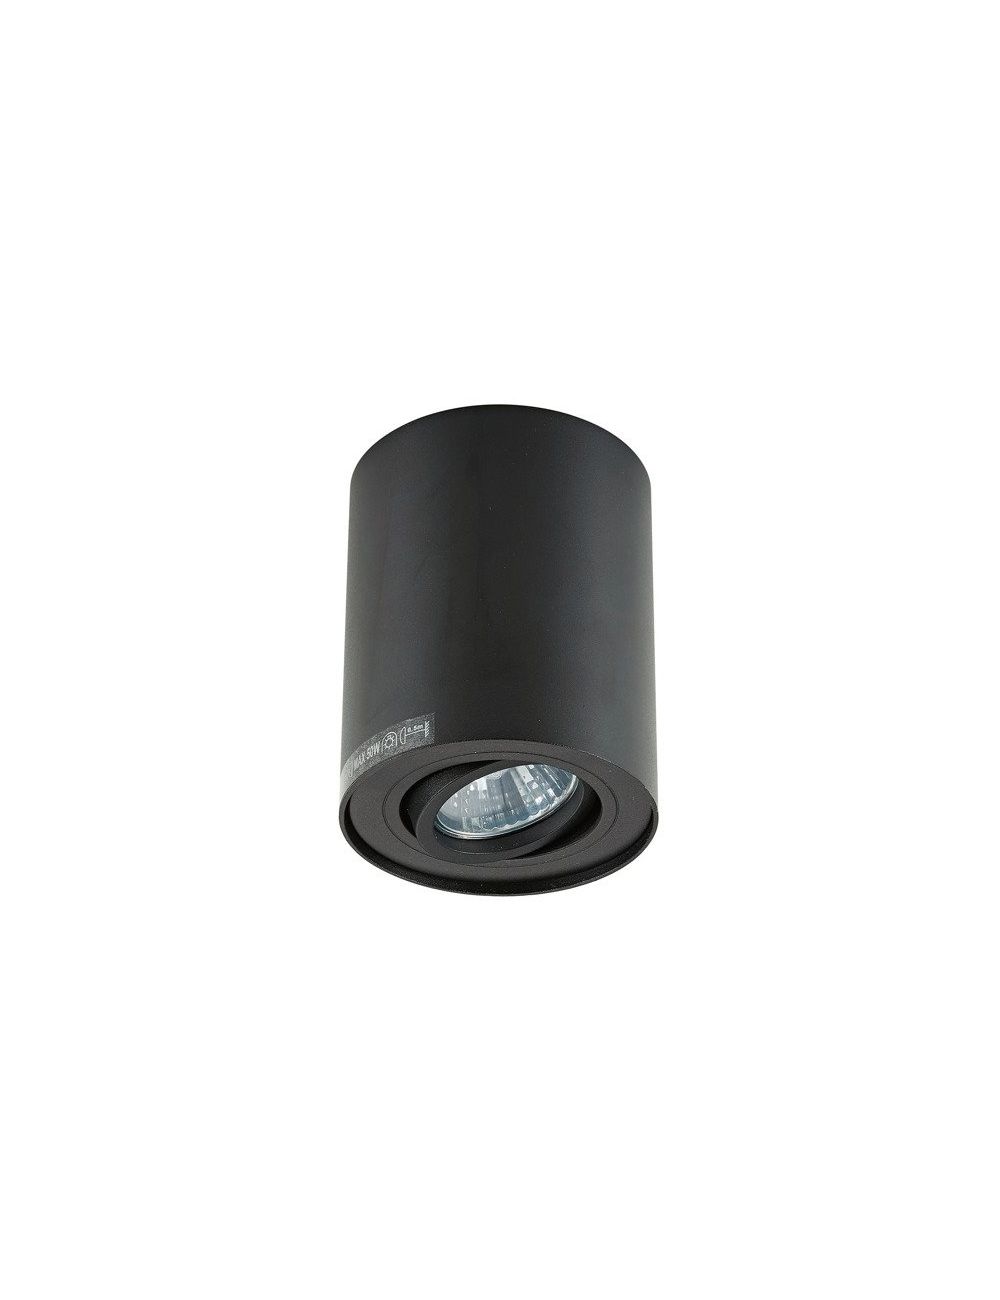 Lampa sufitowa tuba natynkowa spot Rondoc Zuma-line czarna 20038-BK